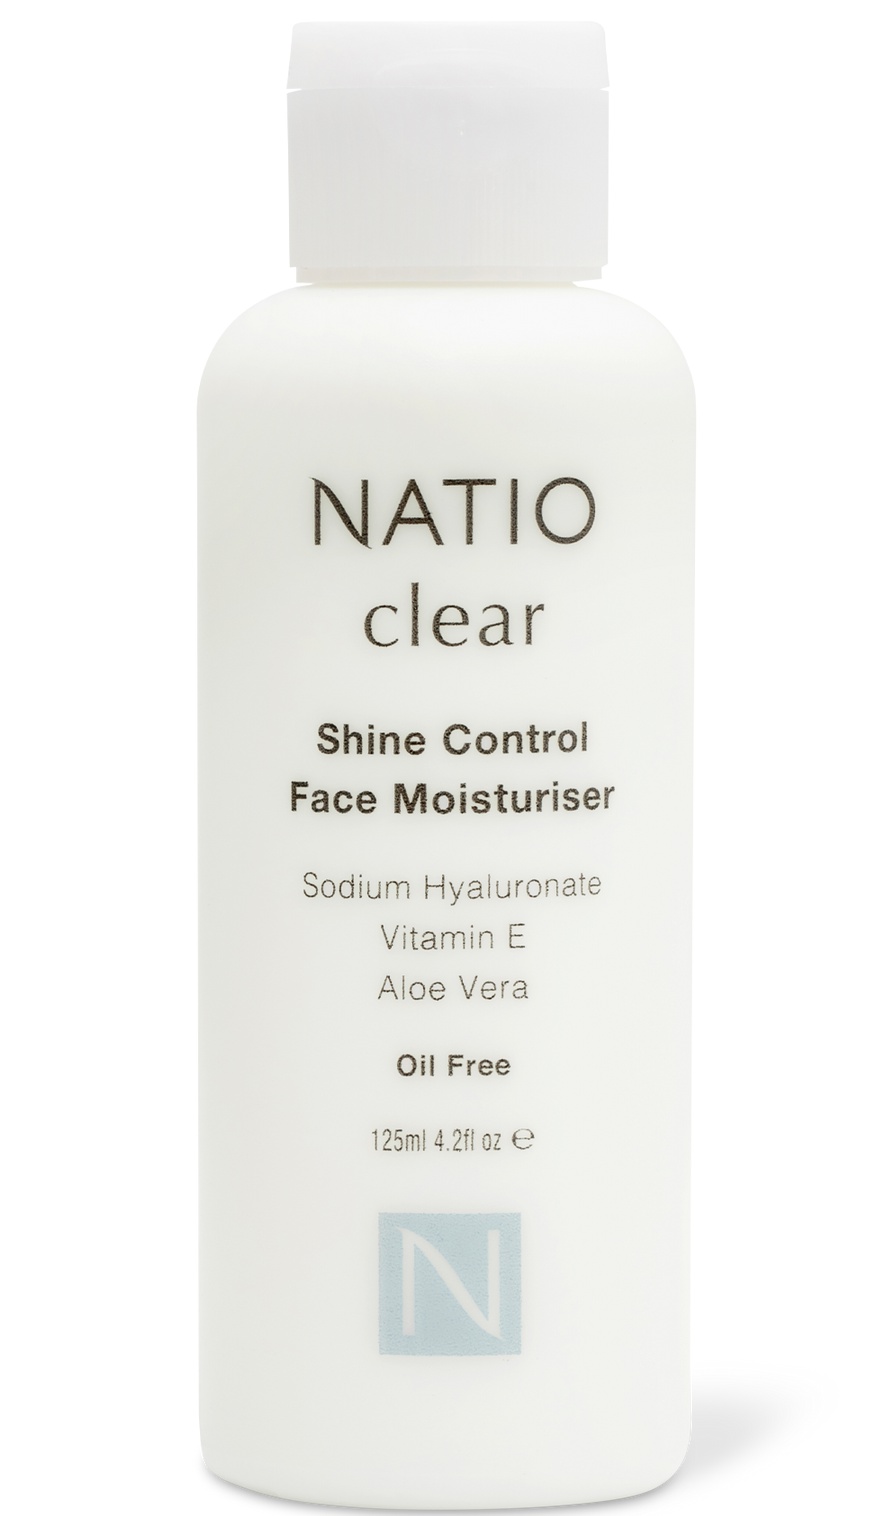 Natio Clear Shine Control Face Moisturiser